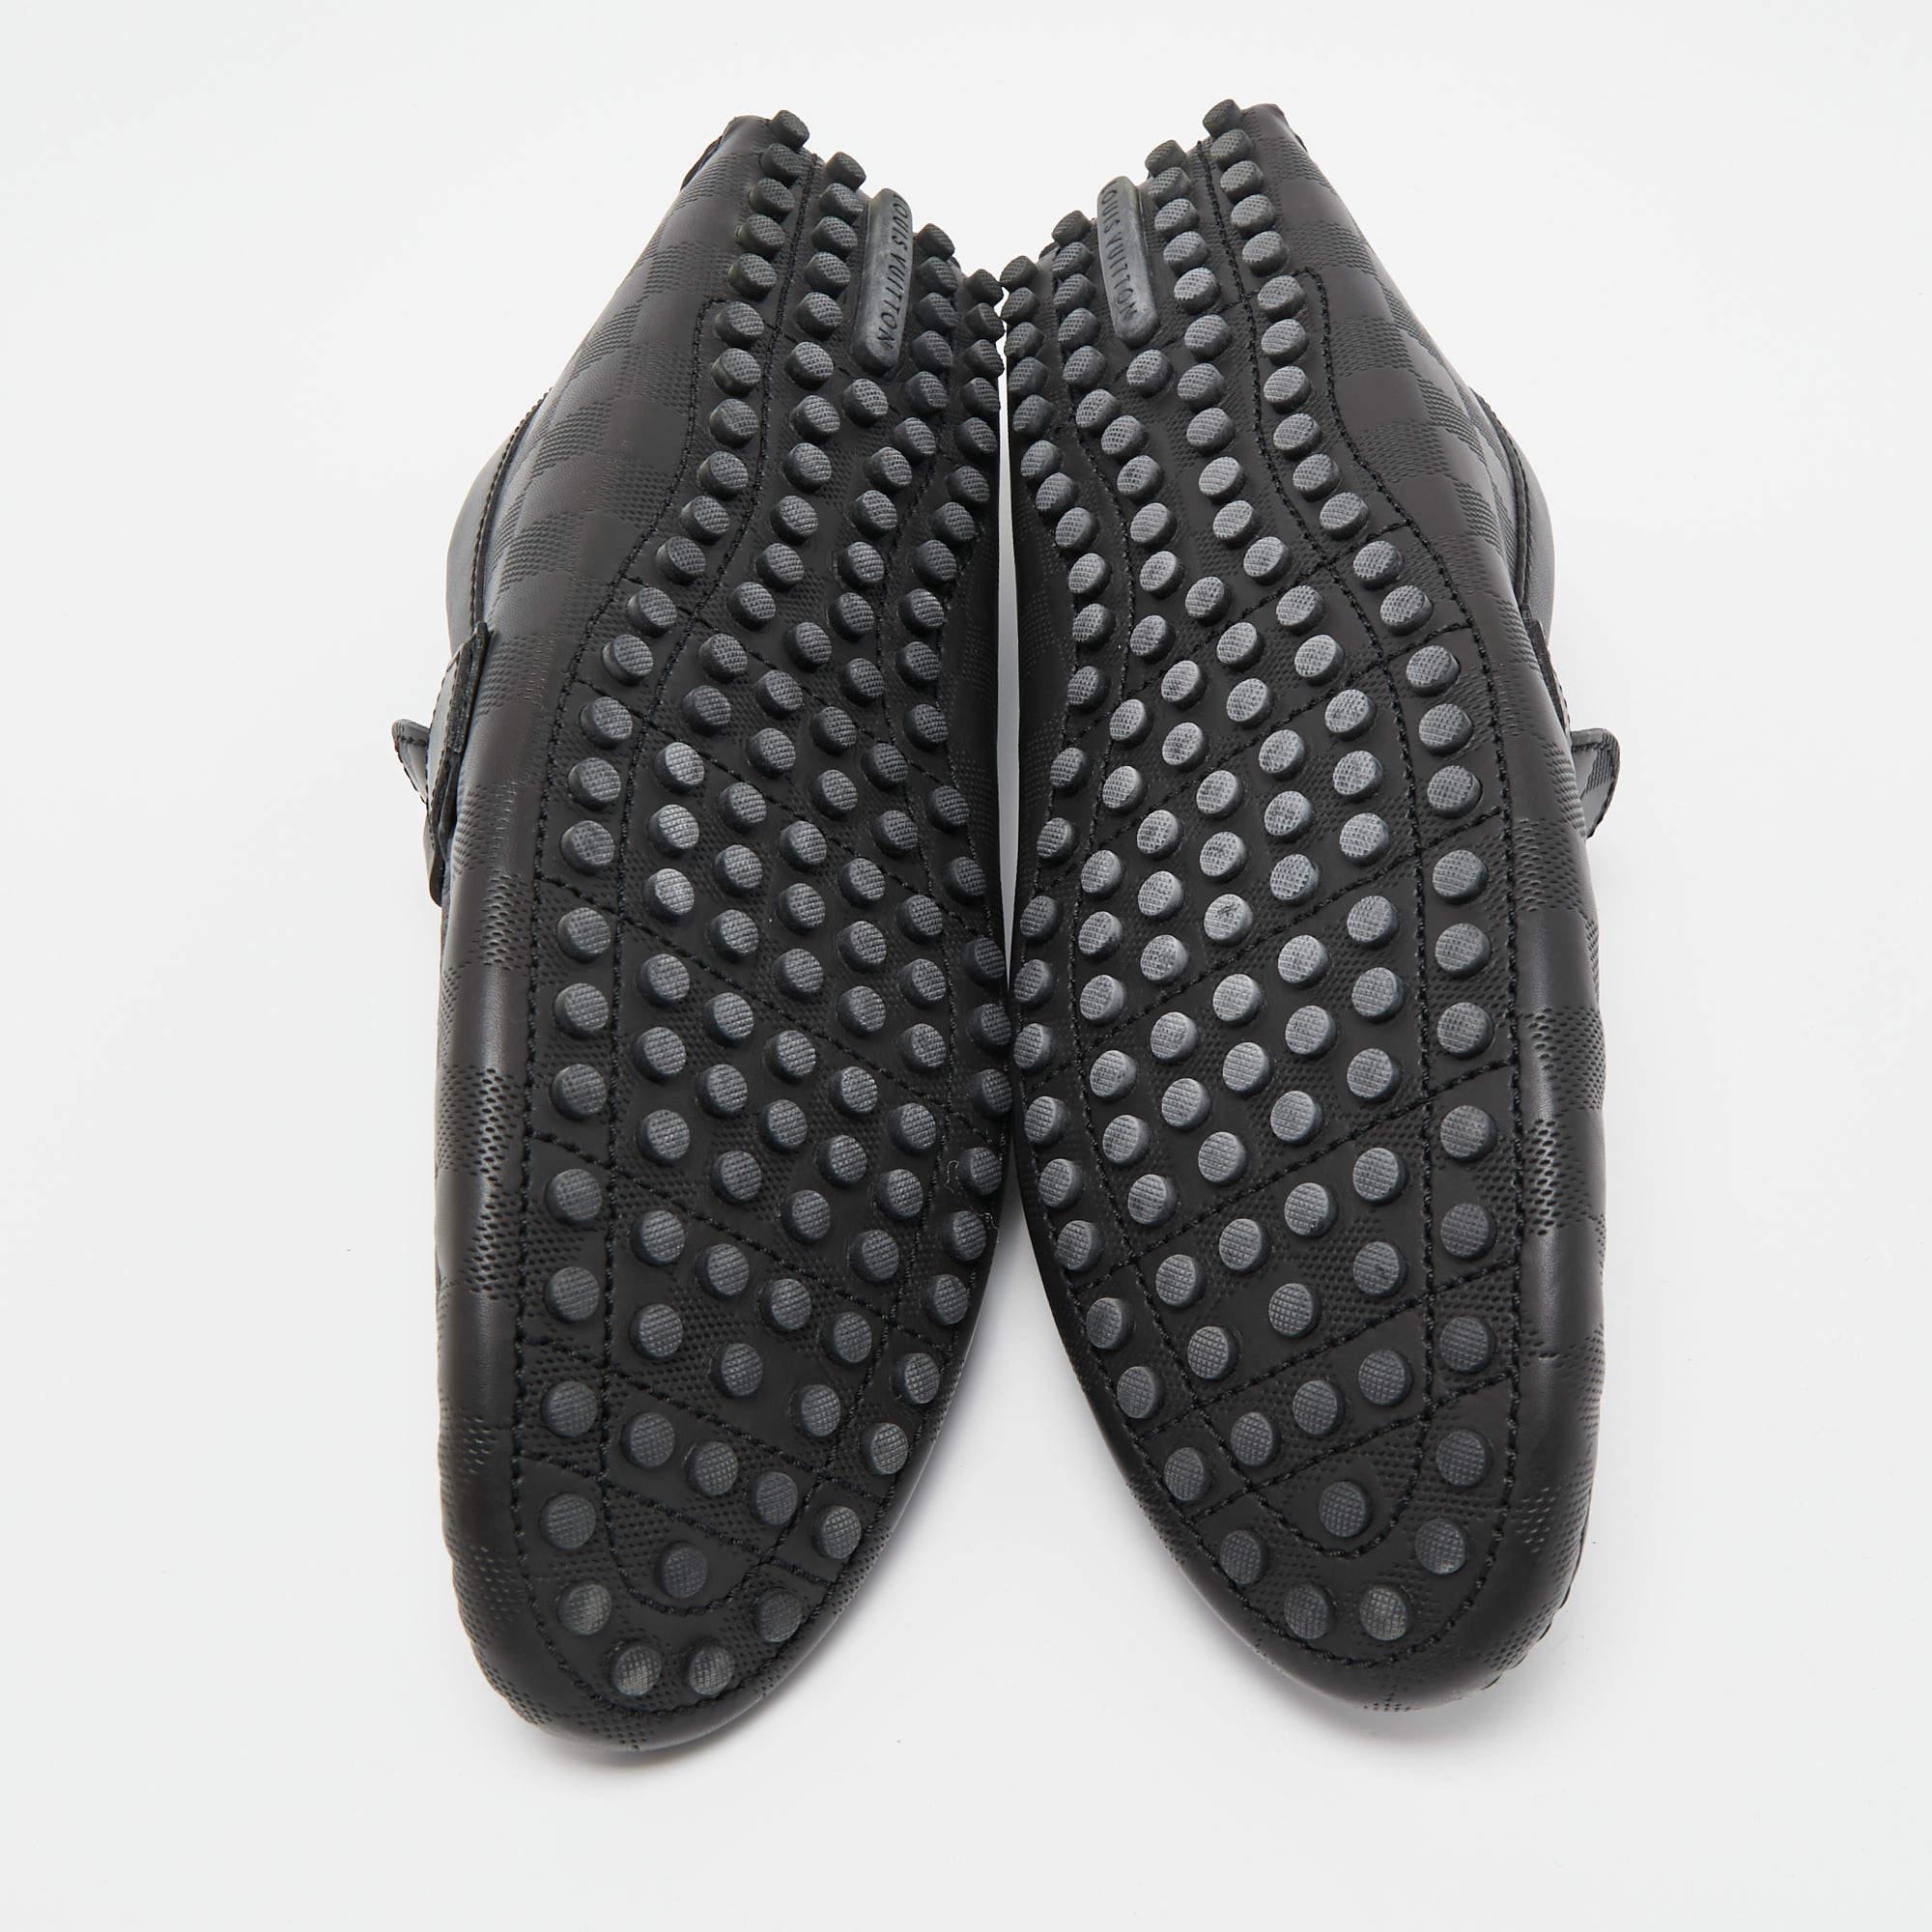 Louis Vuitton Black Damier Graphite Leather Driver Loafers Size 44 4